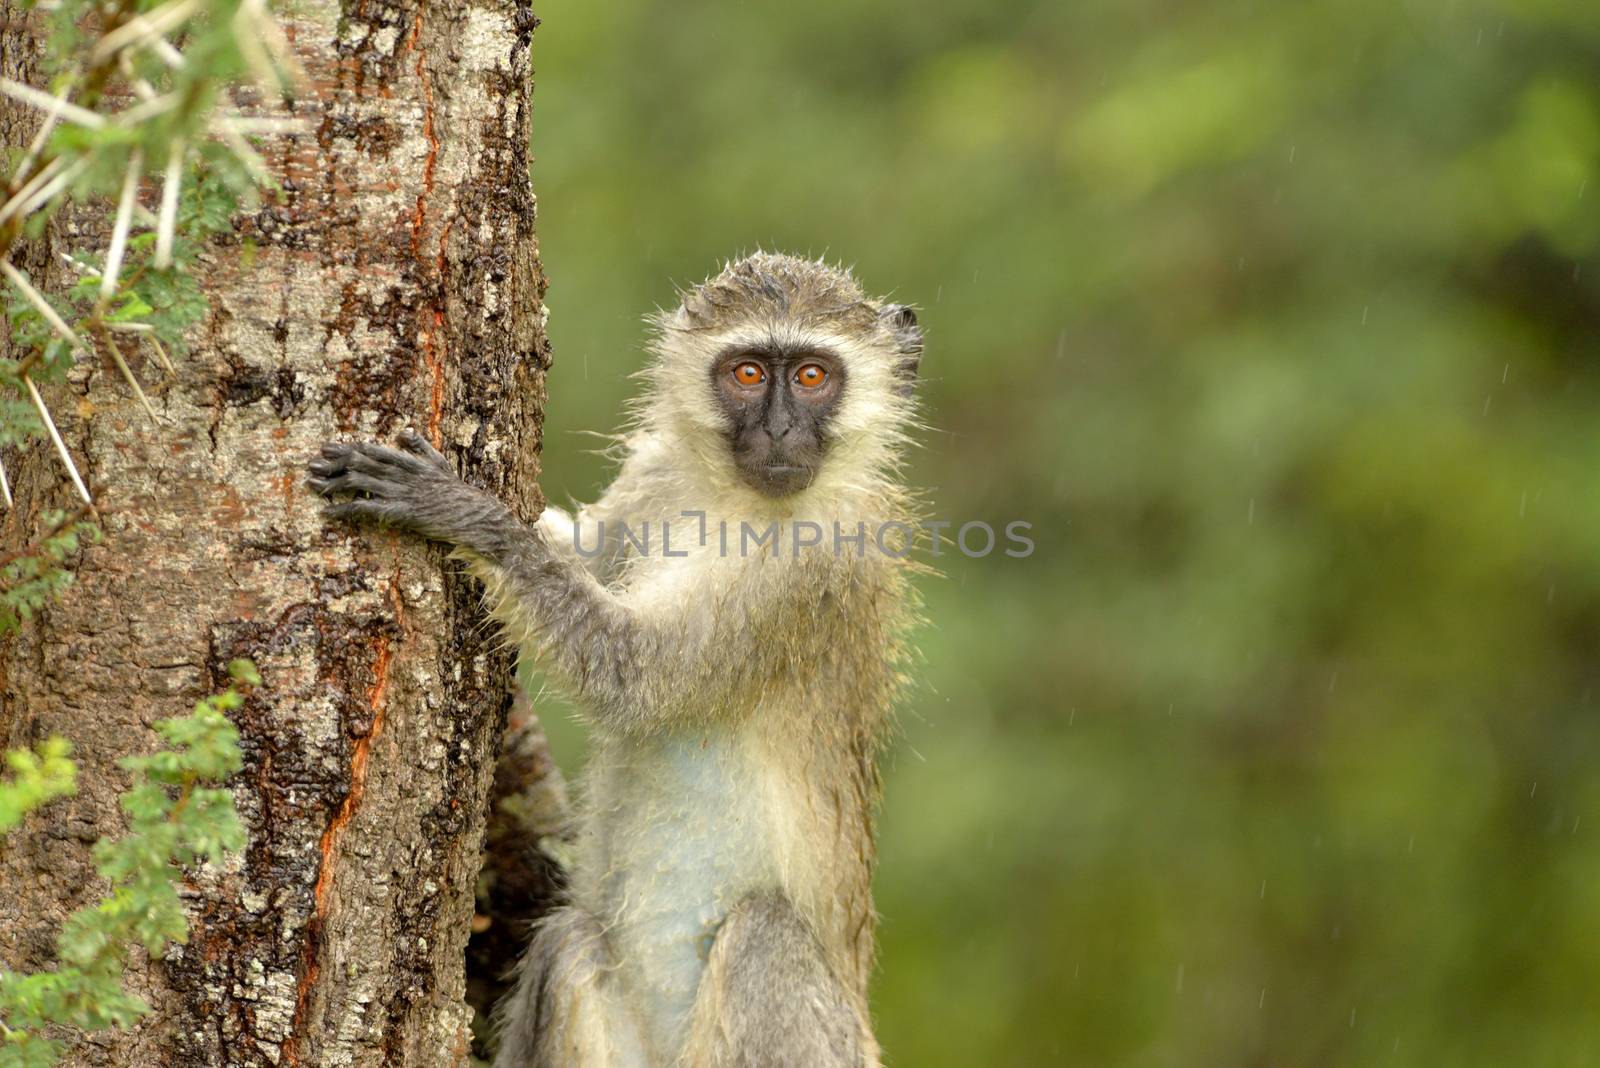 Vervet monkey in the wilderness of Africa